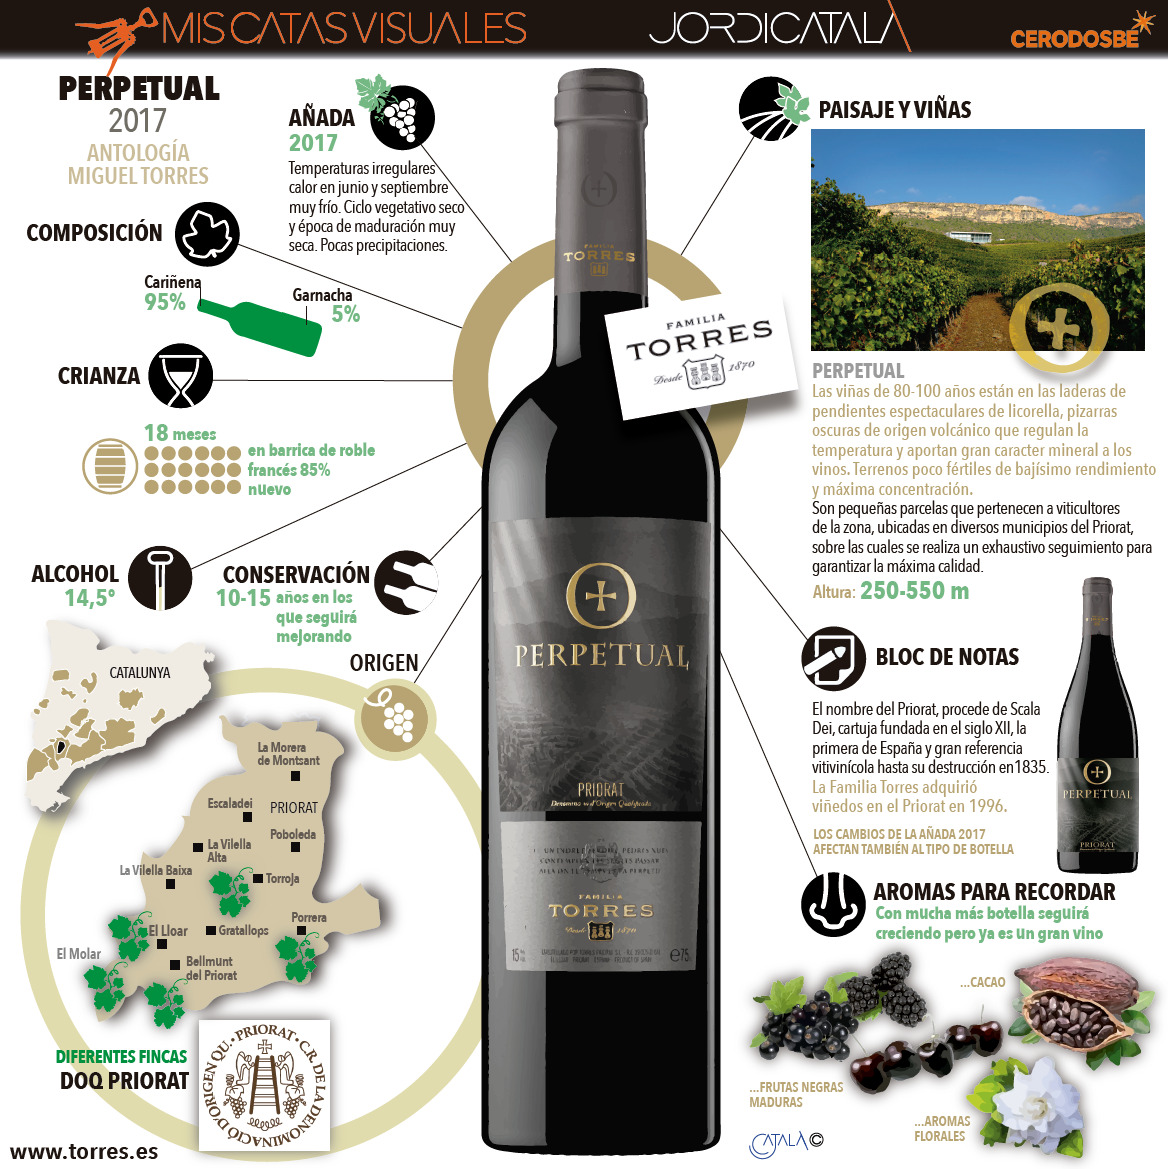 El vino Perpetual se crea con viÃ±as que crecen en un entorno de origen volcÃ¡nico. InfografÃ­a: Jordi CatalÃ 